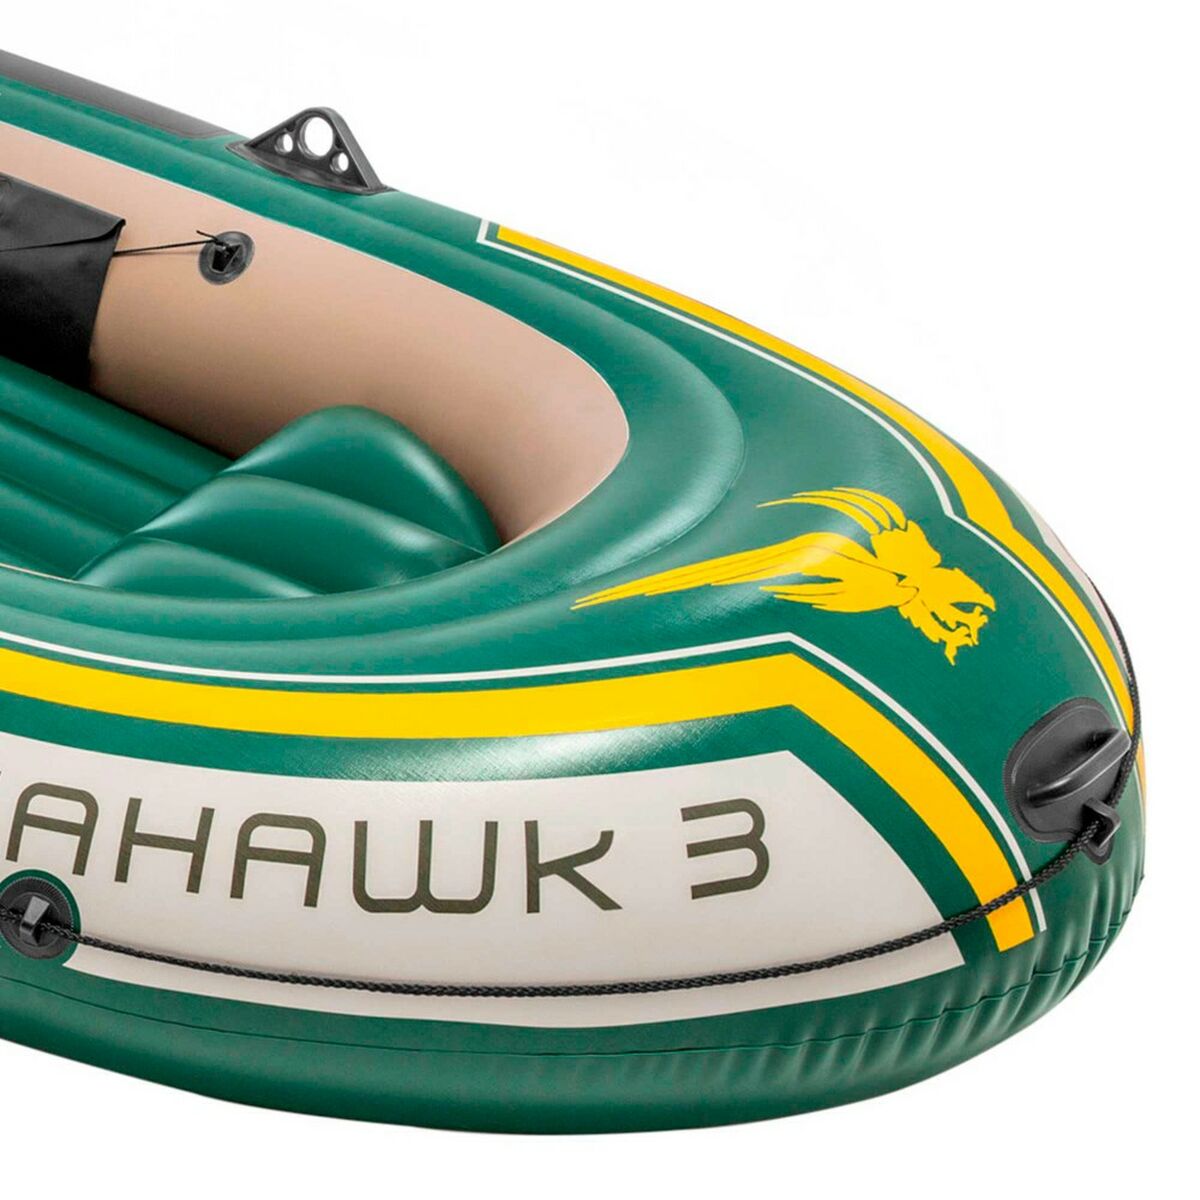 Inflatable Boat Intex Seahawk 3 Green 295 x 43 x 137 cm